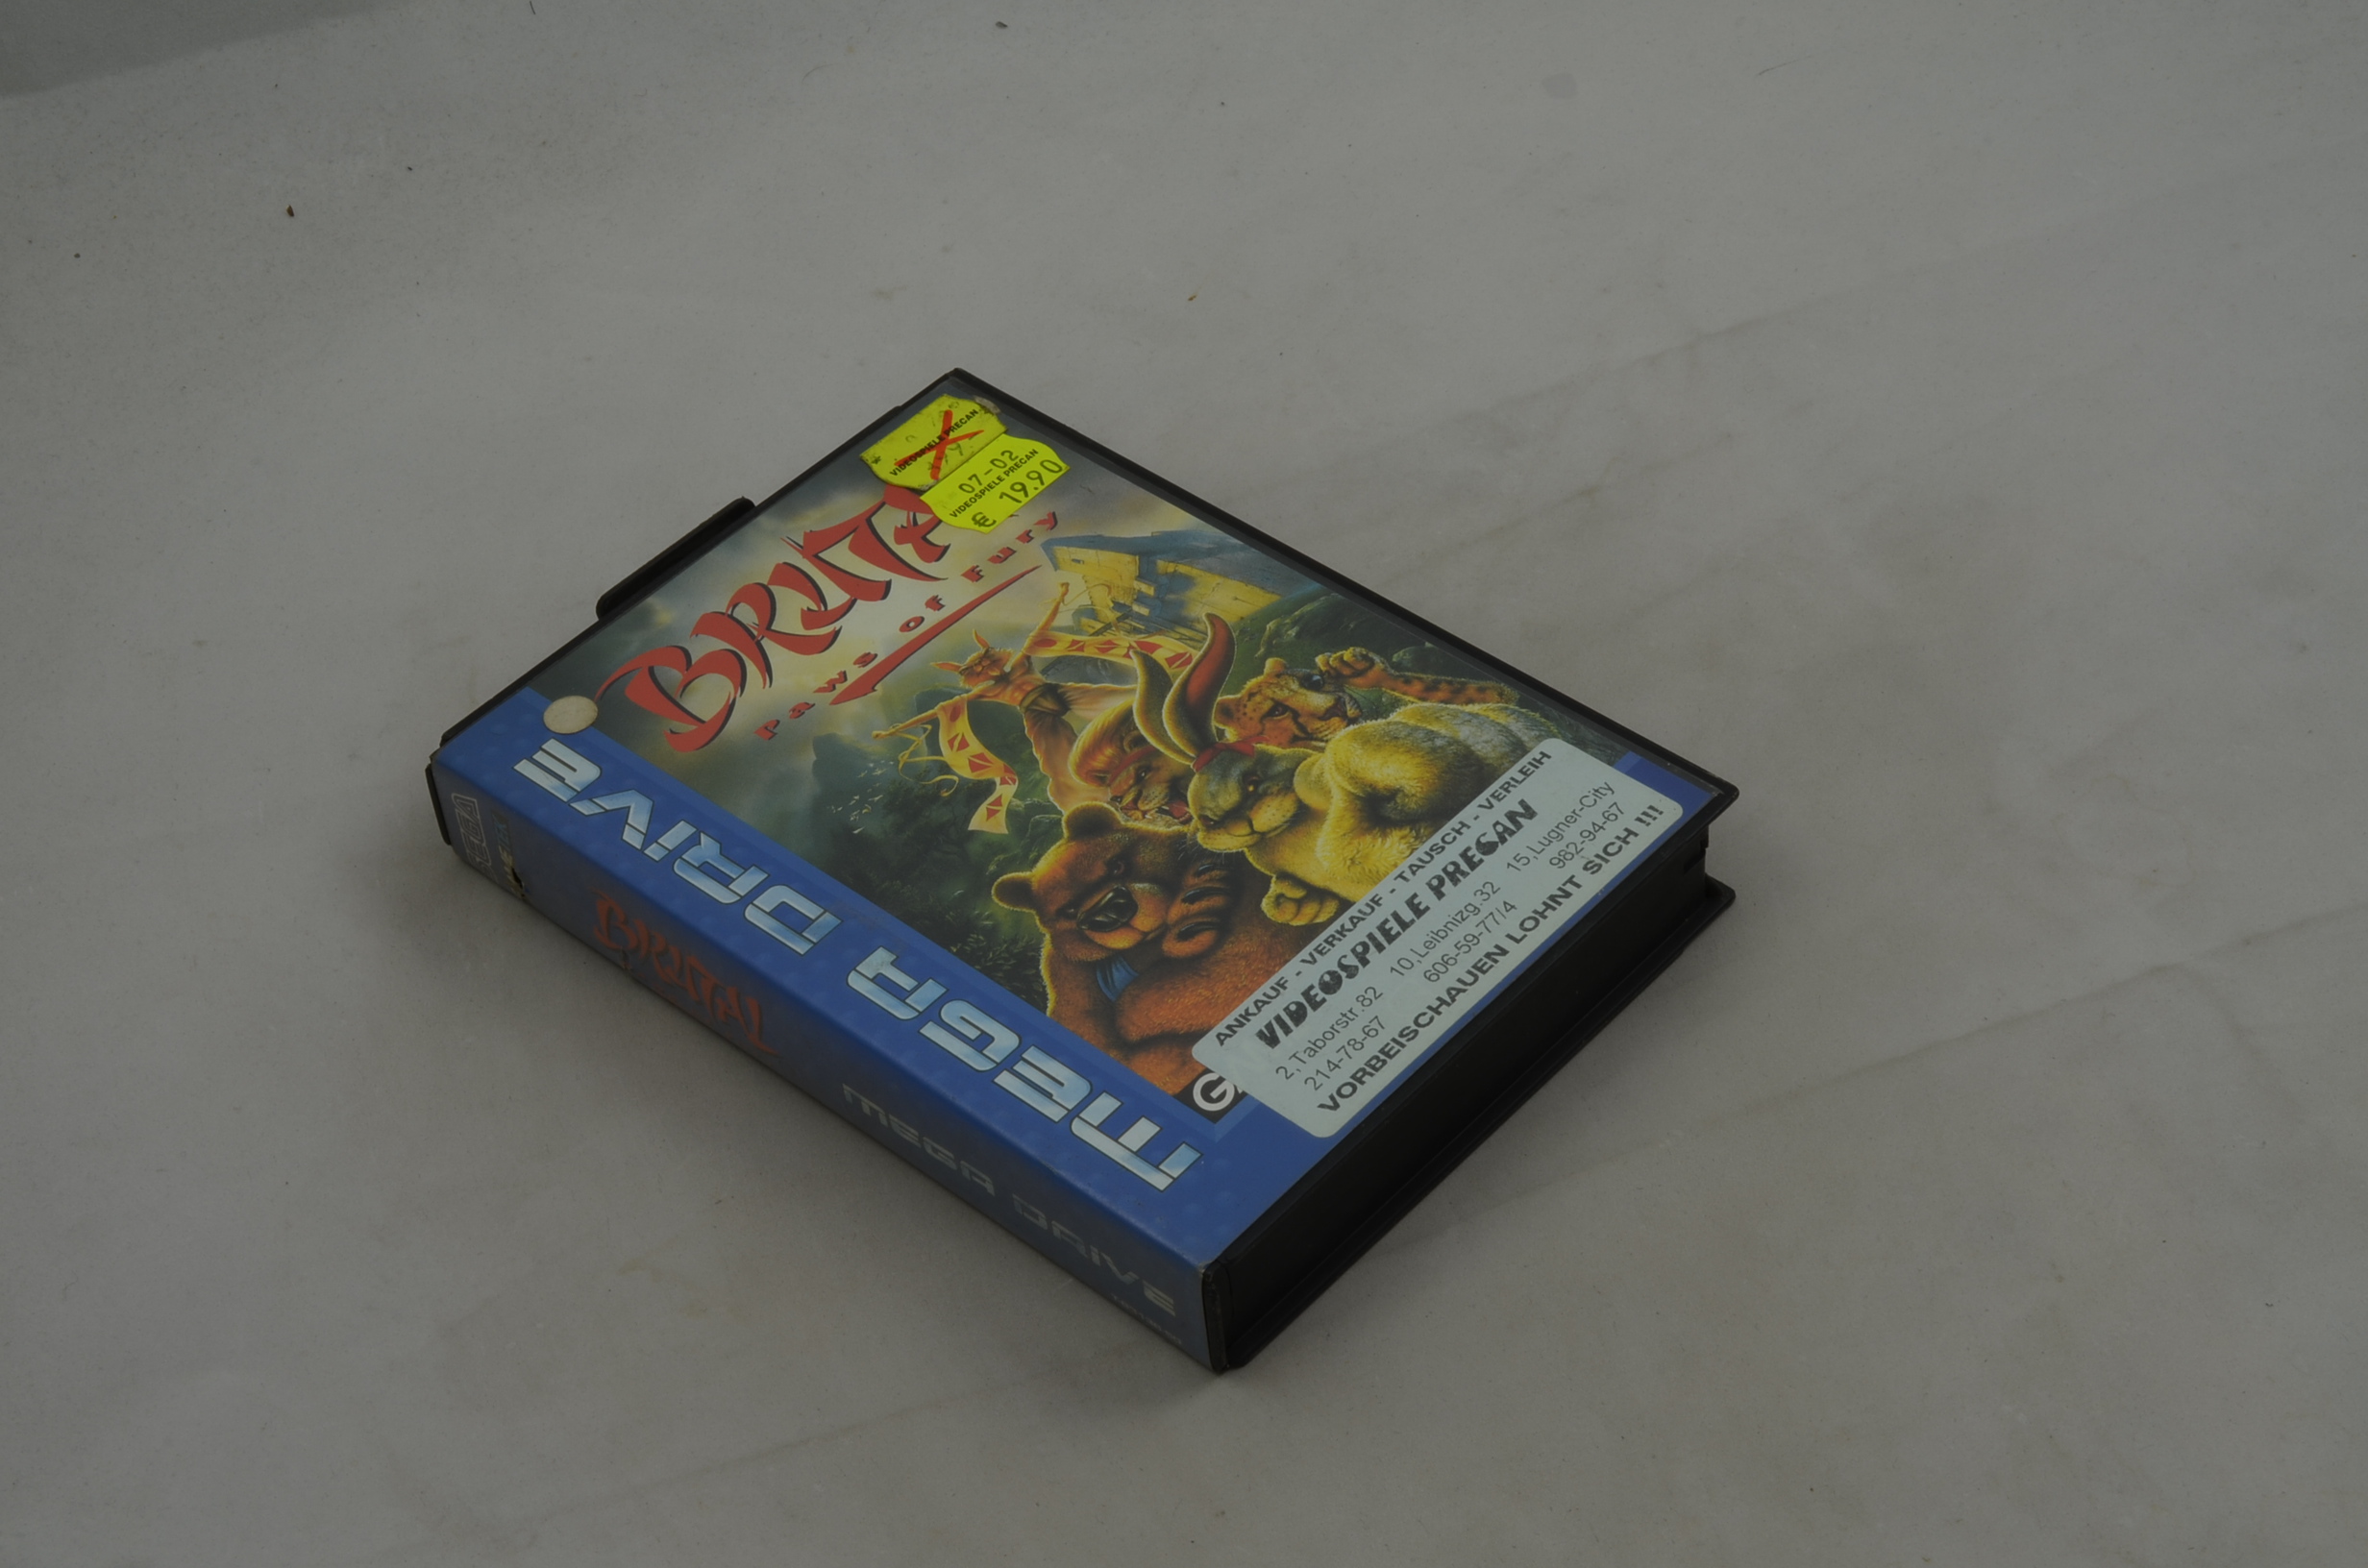 Produktbild von Brutal Paws of Fury Sega Mega Drive Spiel CIB (gut)